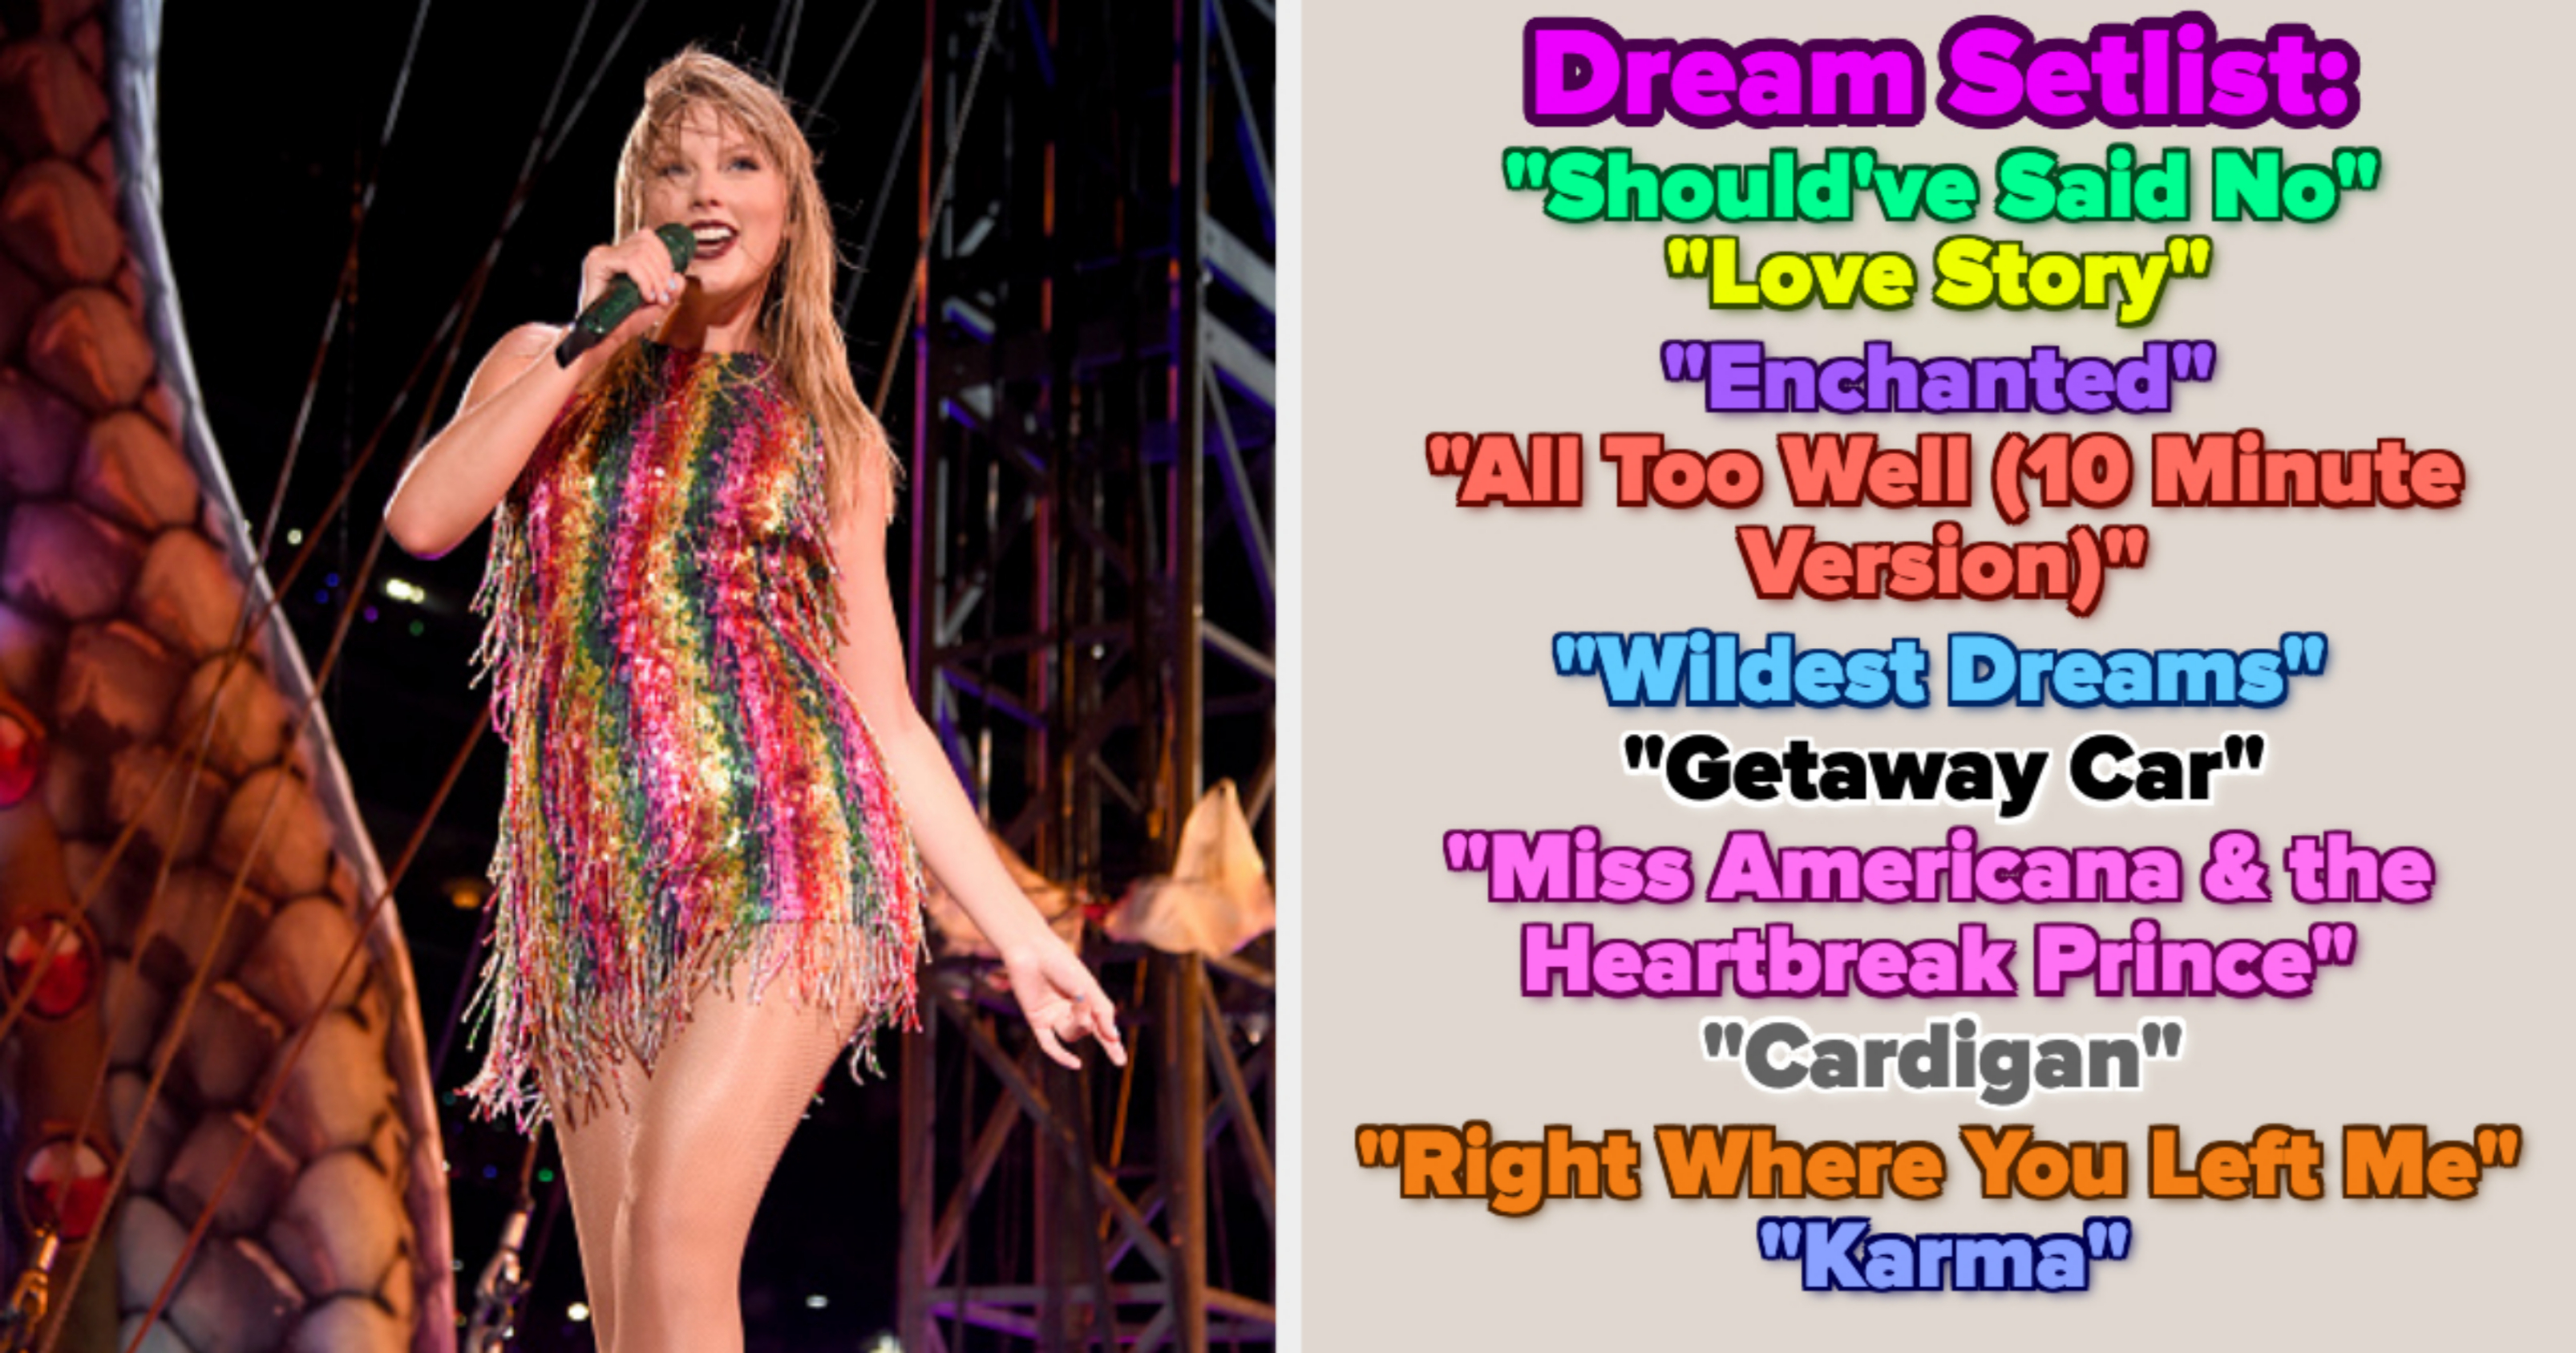 getaway car bridge - Taylor Swift Lyrics - Sticker